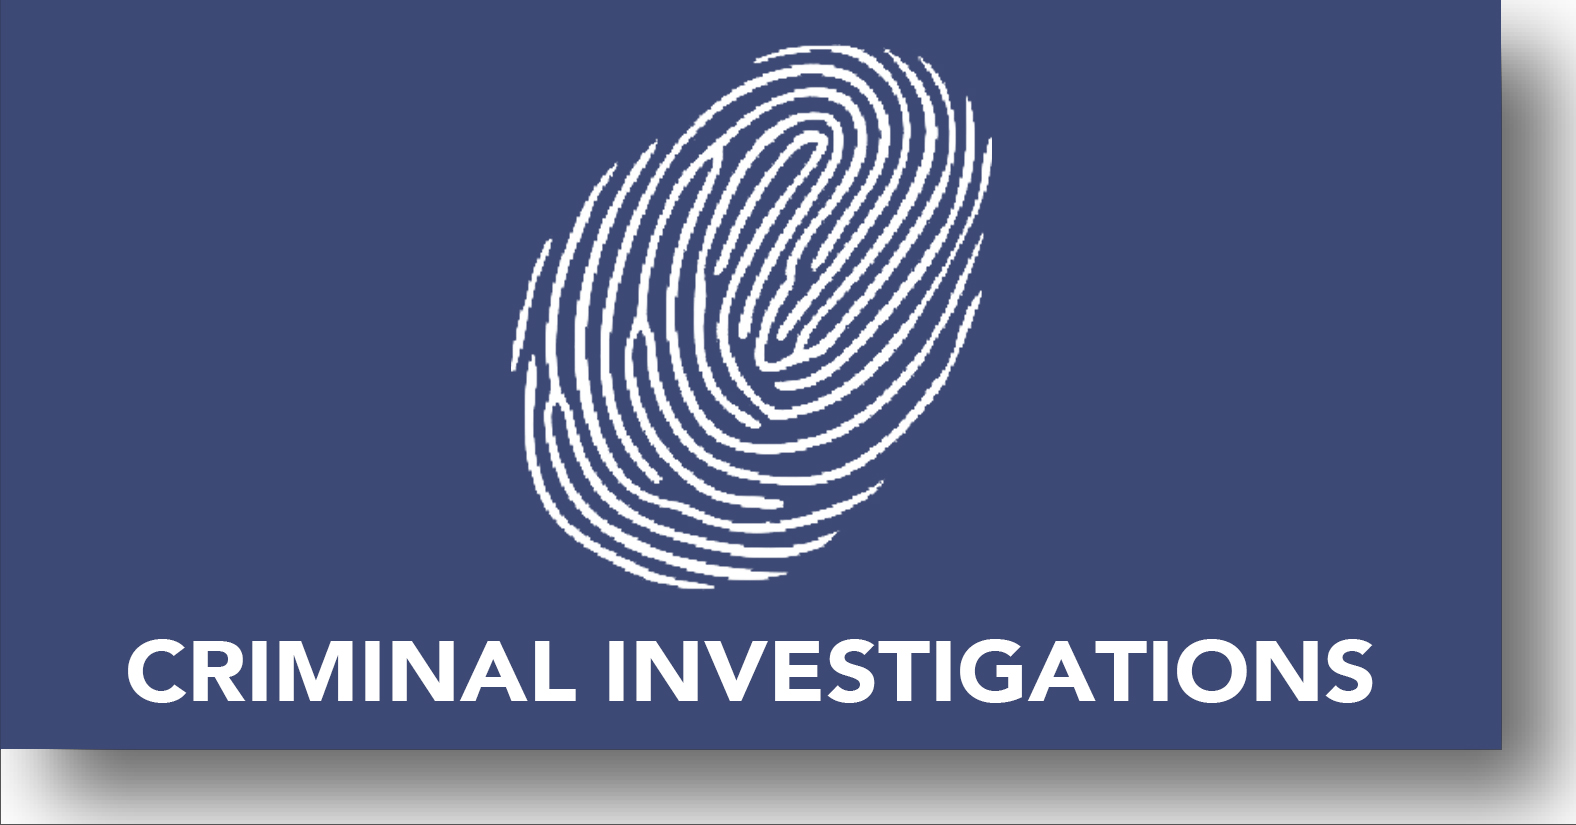 Criminal Investigations Division